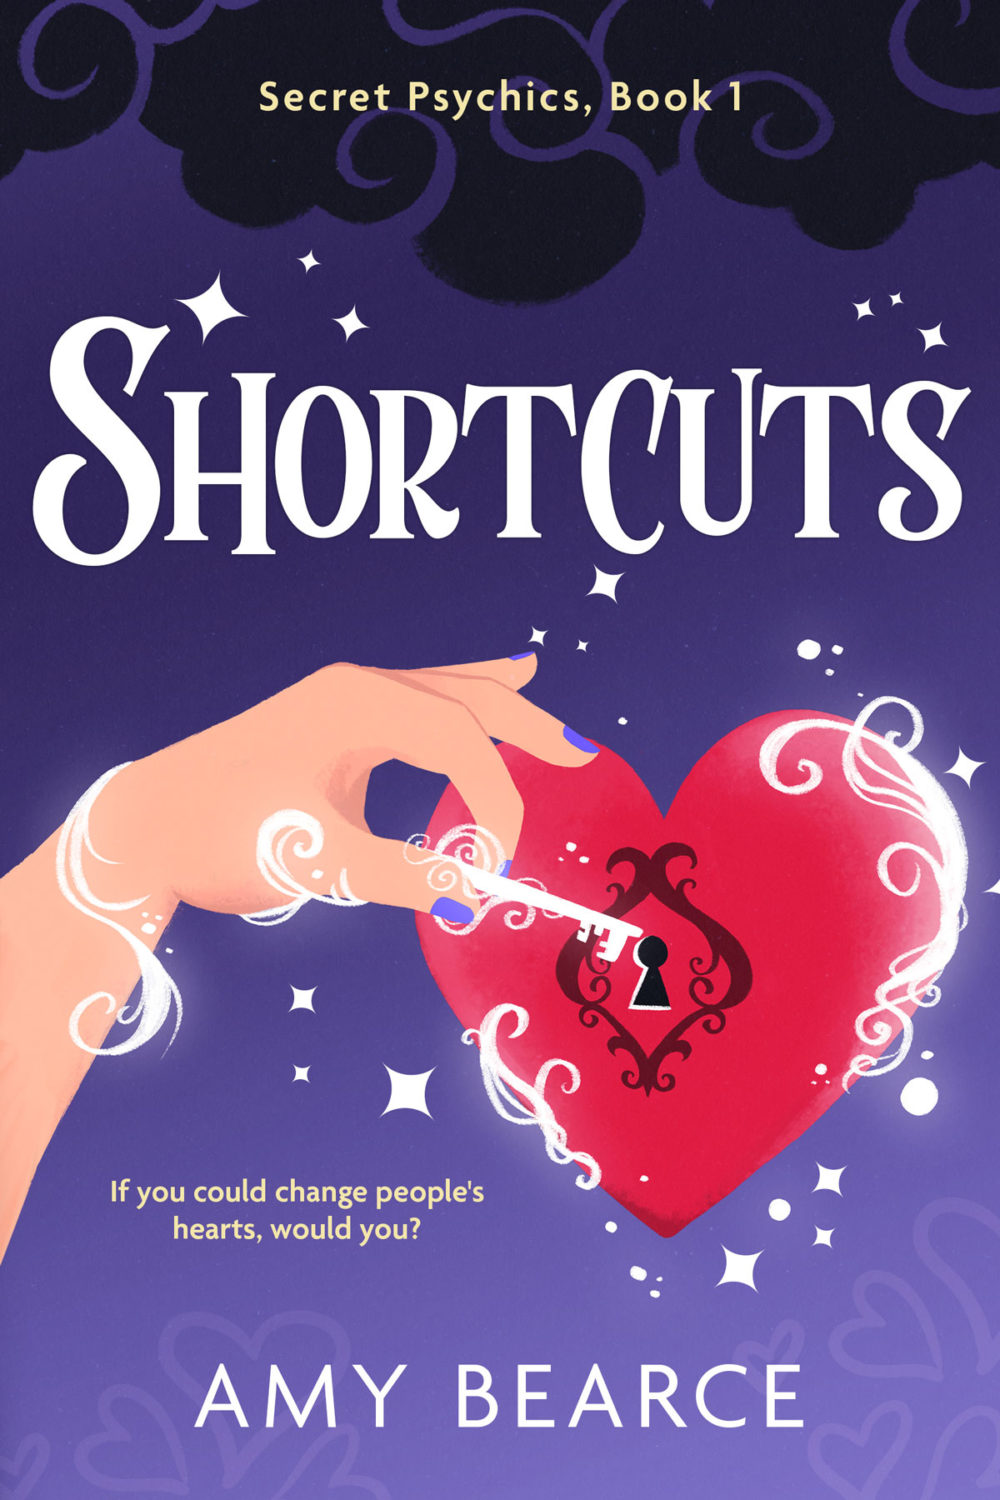 Shortcuts by Amy Bearce